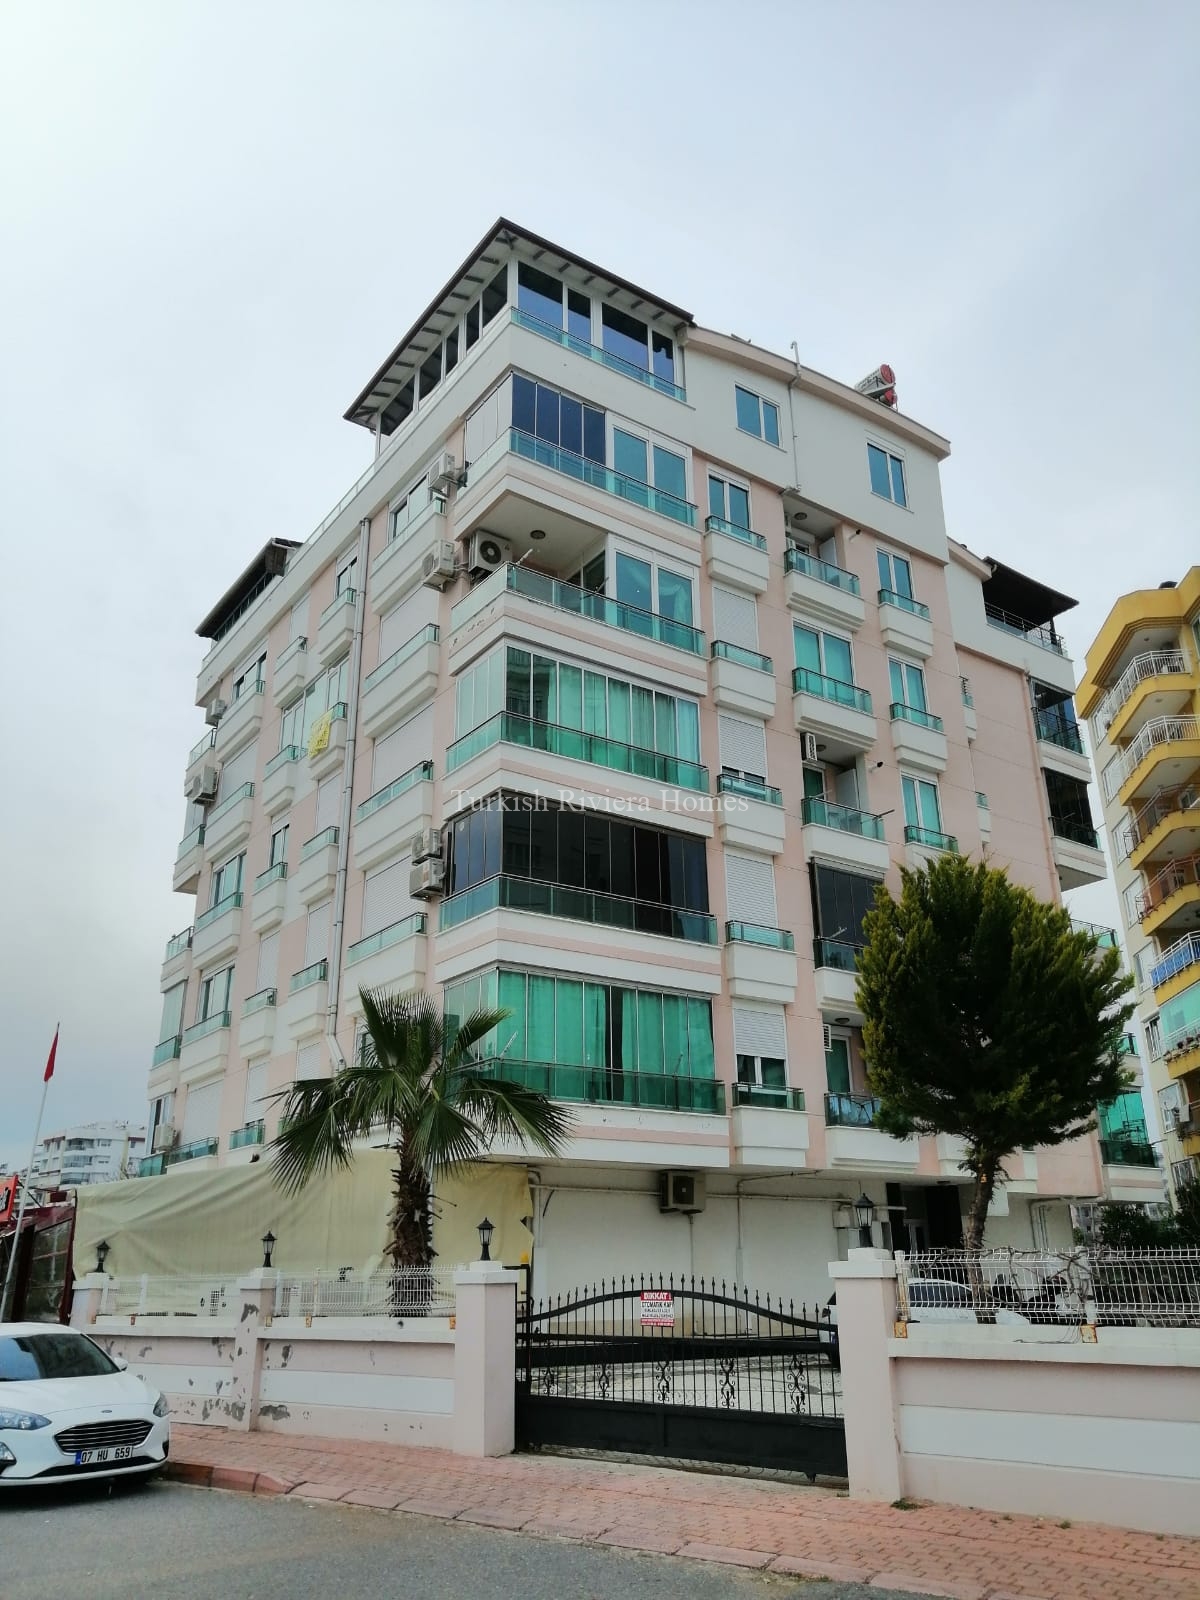 4-Bedroom Luxury Fully Furnished Apartment in Konyaaltı